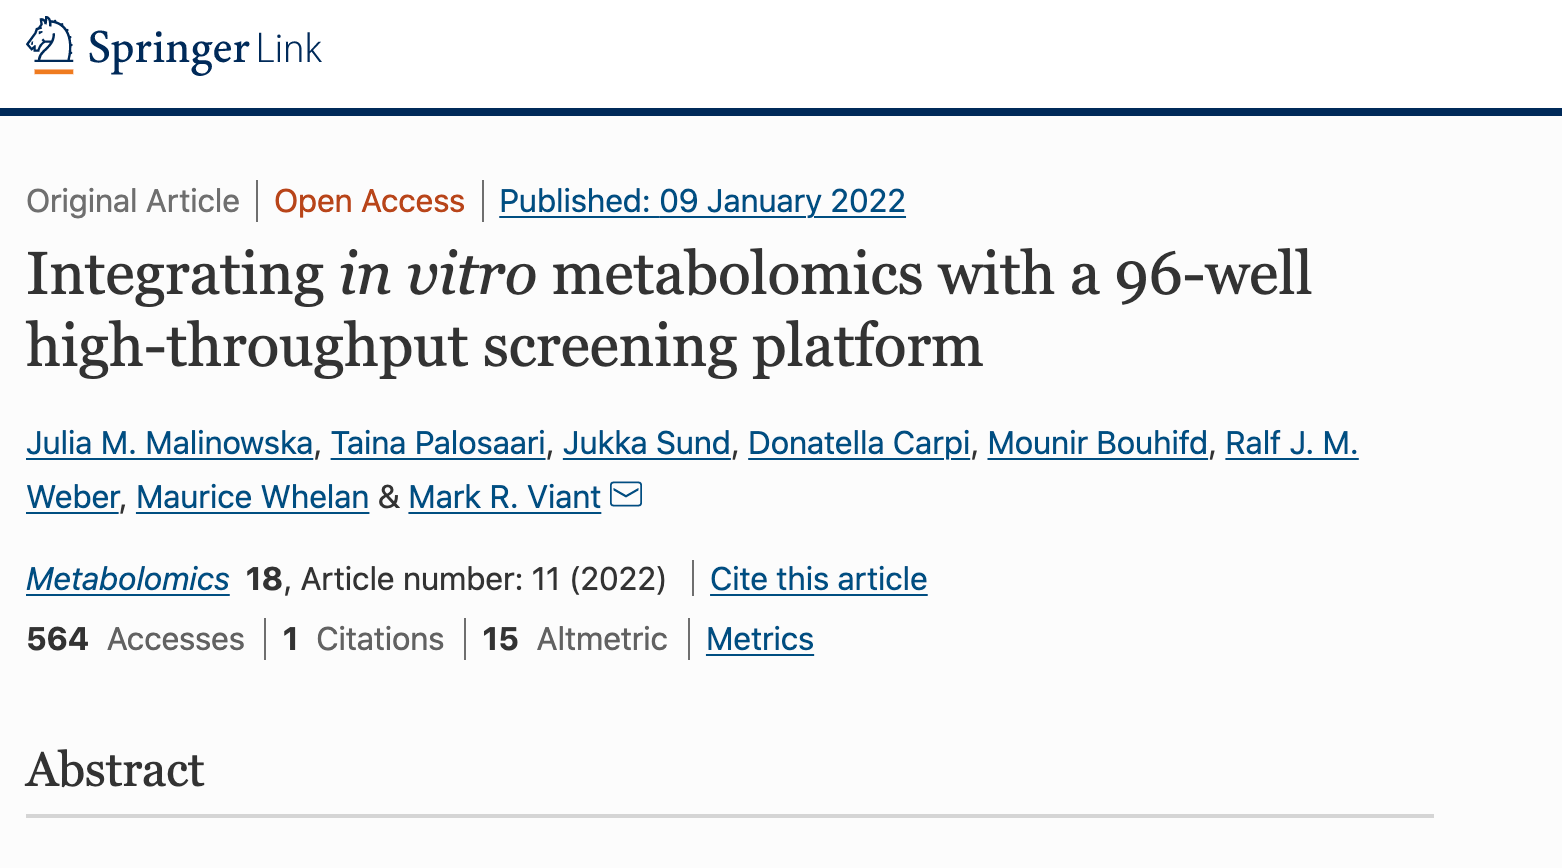 Integrating in vitro metabolomics with a 96-well high-throughput screening platform